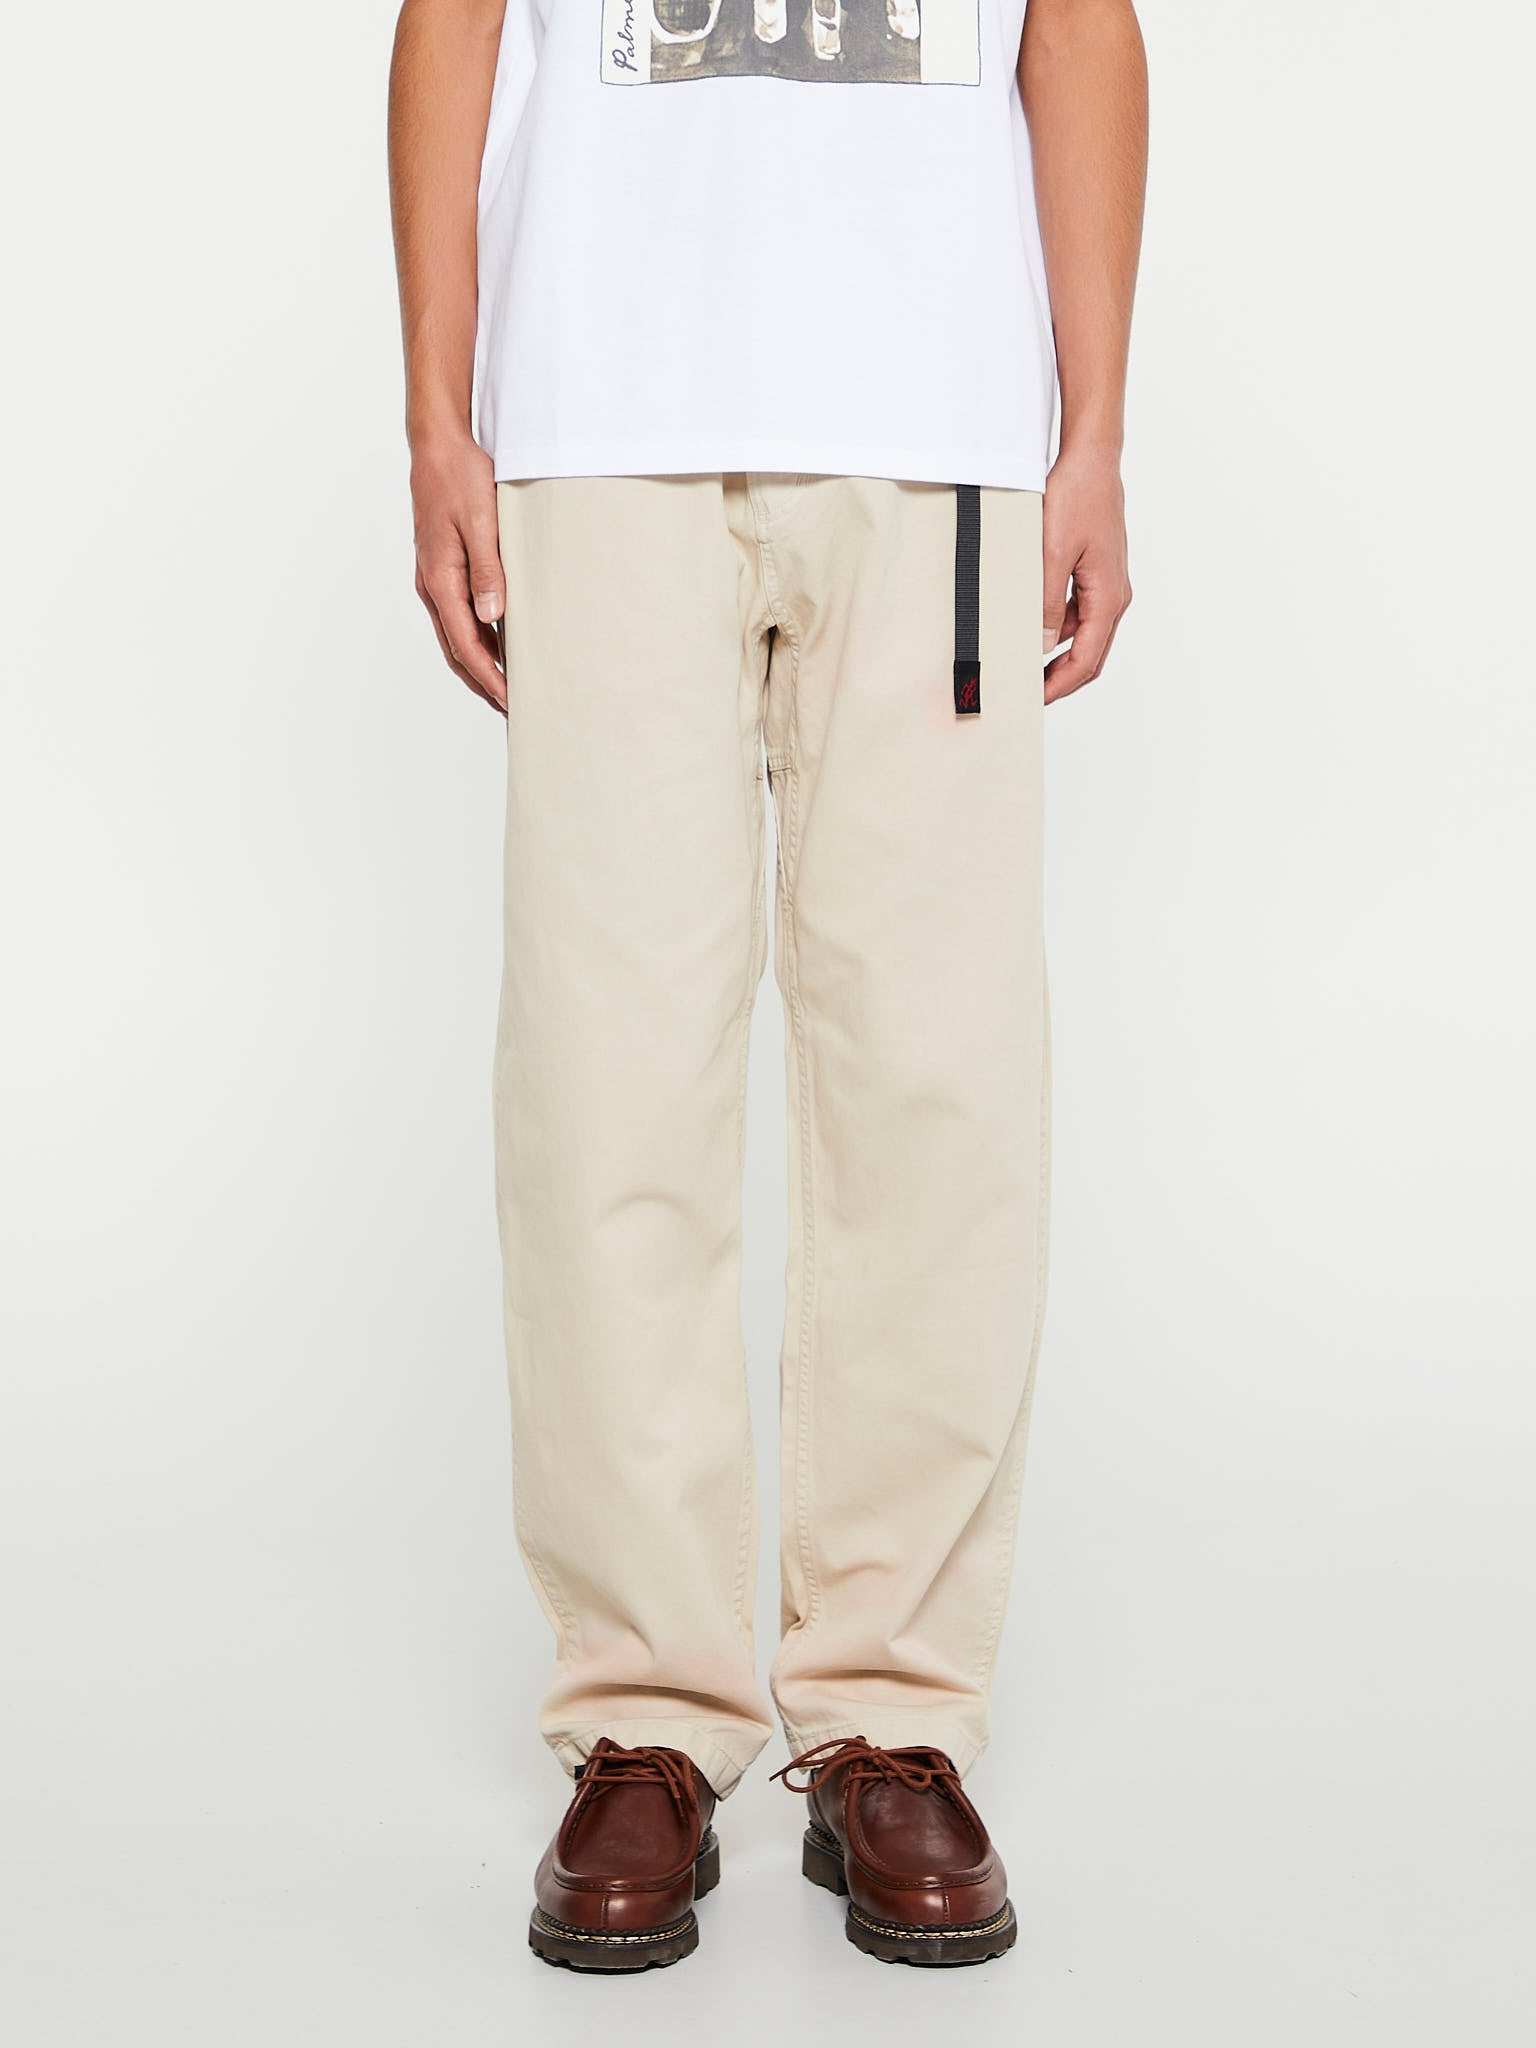 Gramicci Pants womens Sz 14 Hiking casual jogger pants zipper pockets | eBay